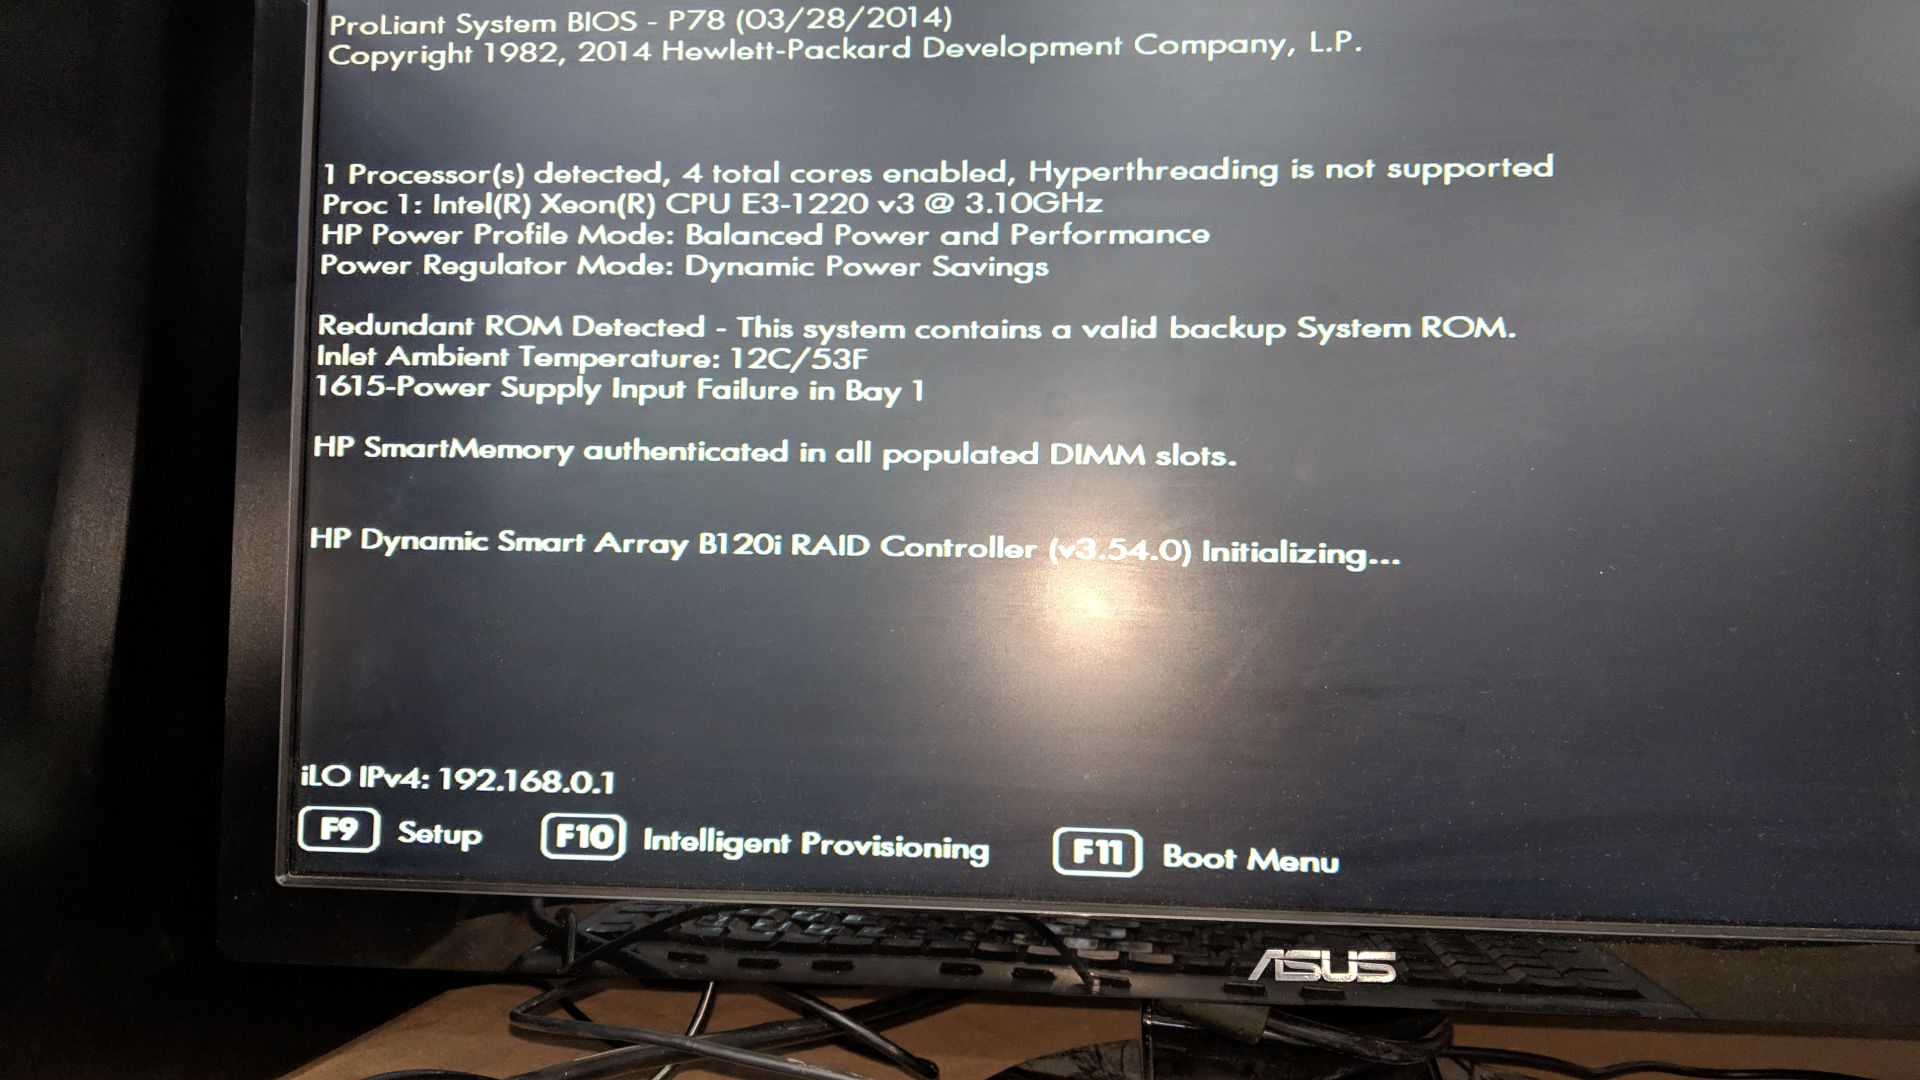 HP Proliant ML 310E Gen8 V2 wit Intel Xeon E3-1220 v3 @ 3.1 GHz, 8GB Ram, 27" Monitor, NB No HDD's - Image 8 of 8